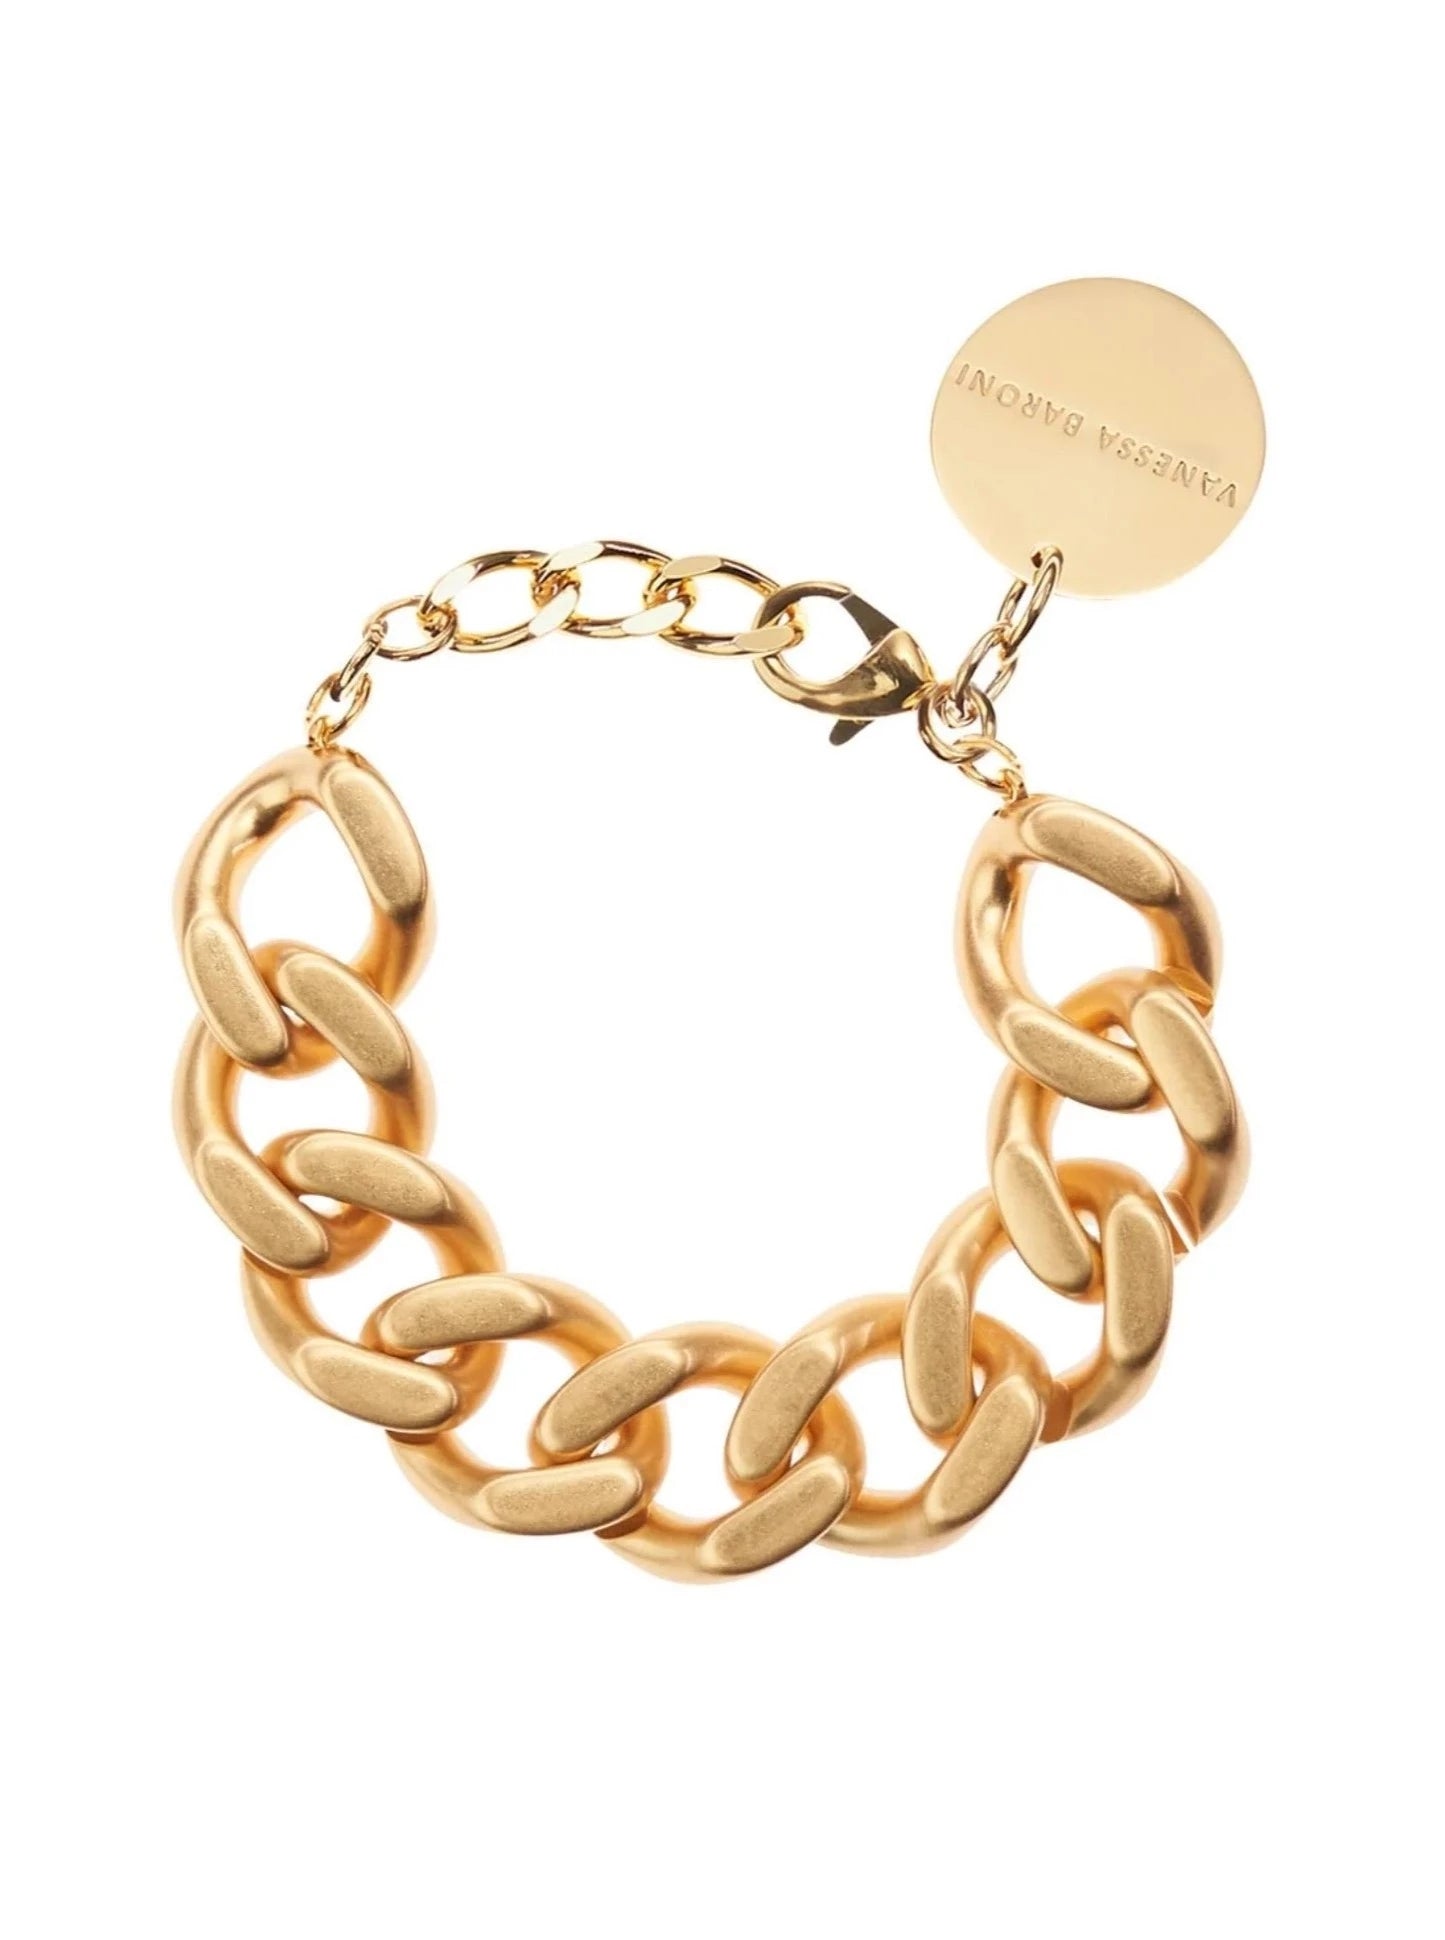 Flat chain bracelet, gold vintage